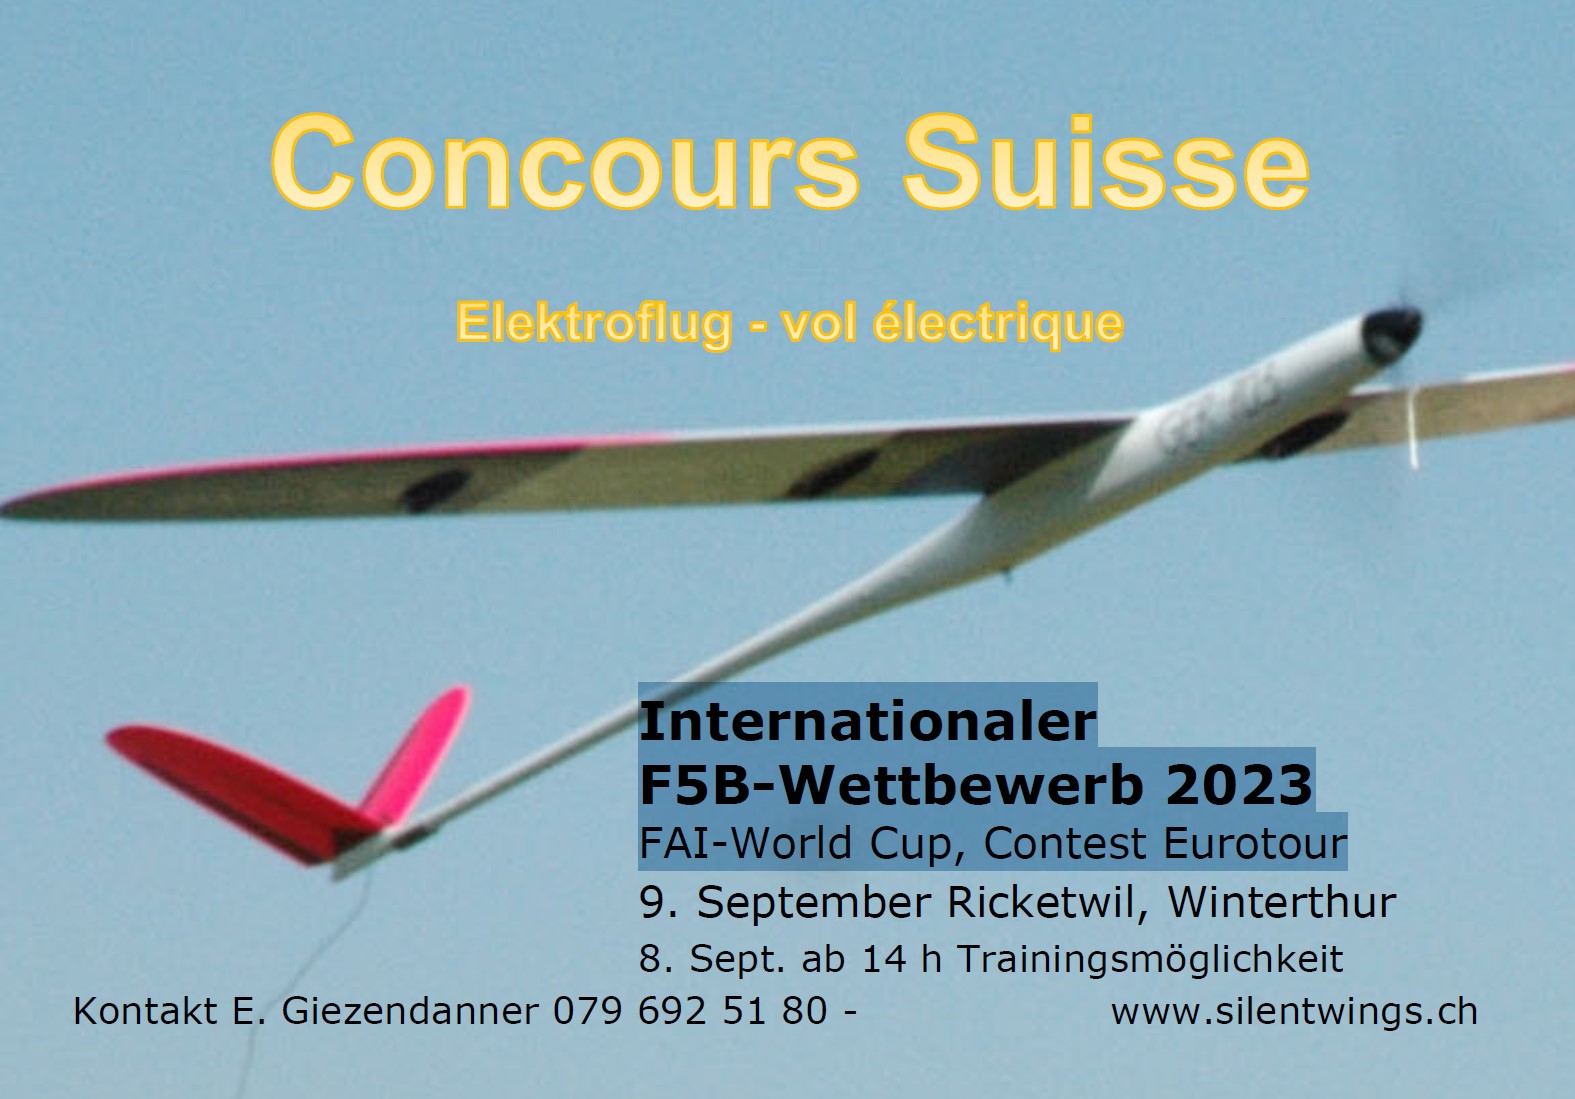 Concours Suisse - Internationaler F5B-Wettbewerb 2023 FAI-World Cup, Contest Eurotour